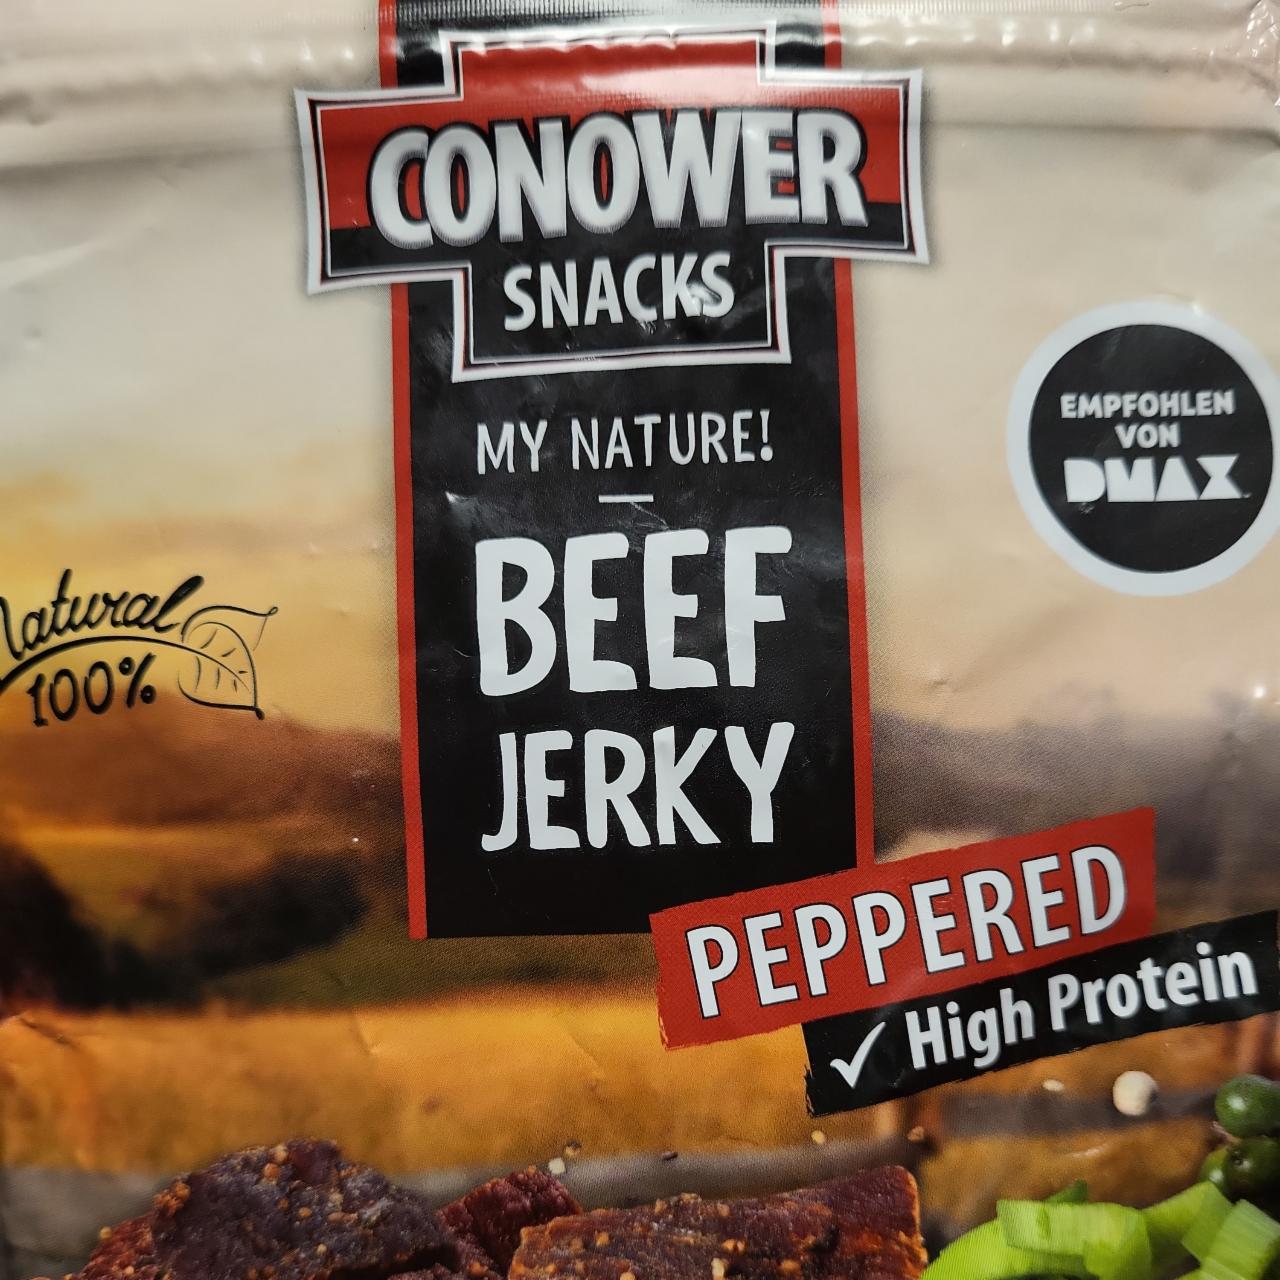 Fotografie - Beef jerky Peppered Conower snacks